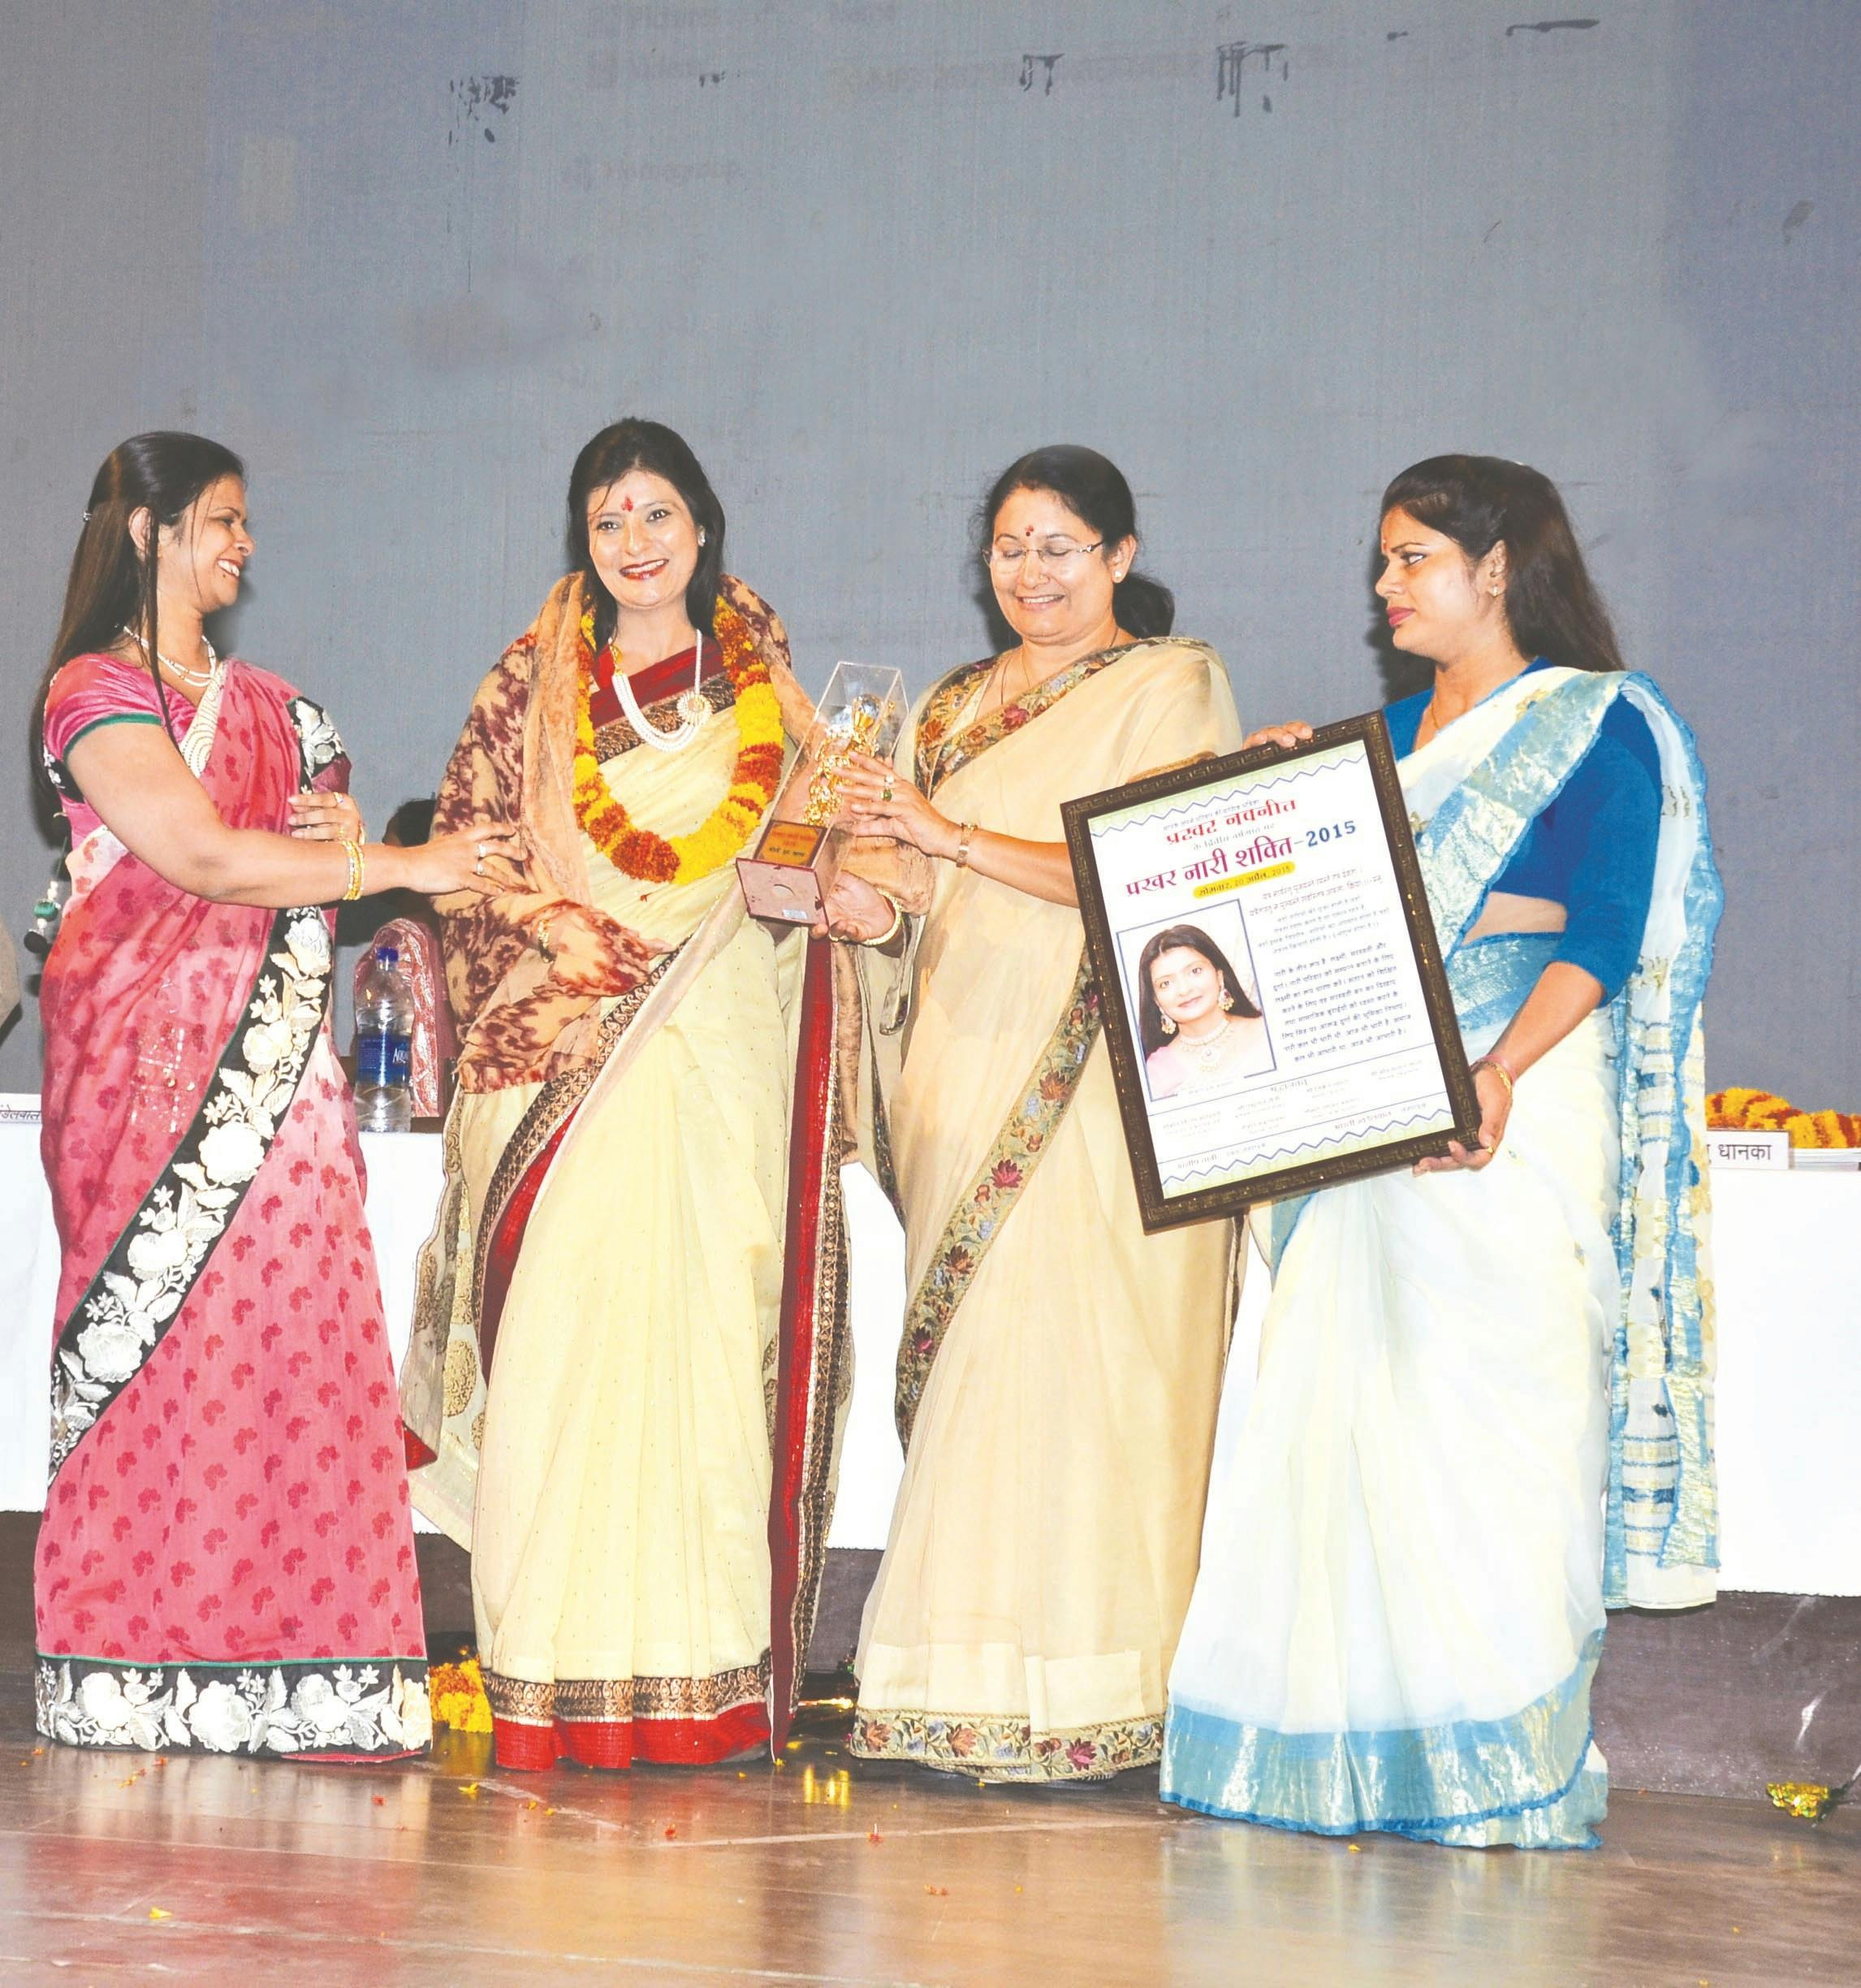 Aray College Awards